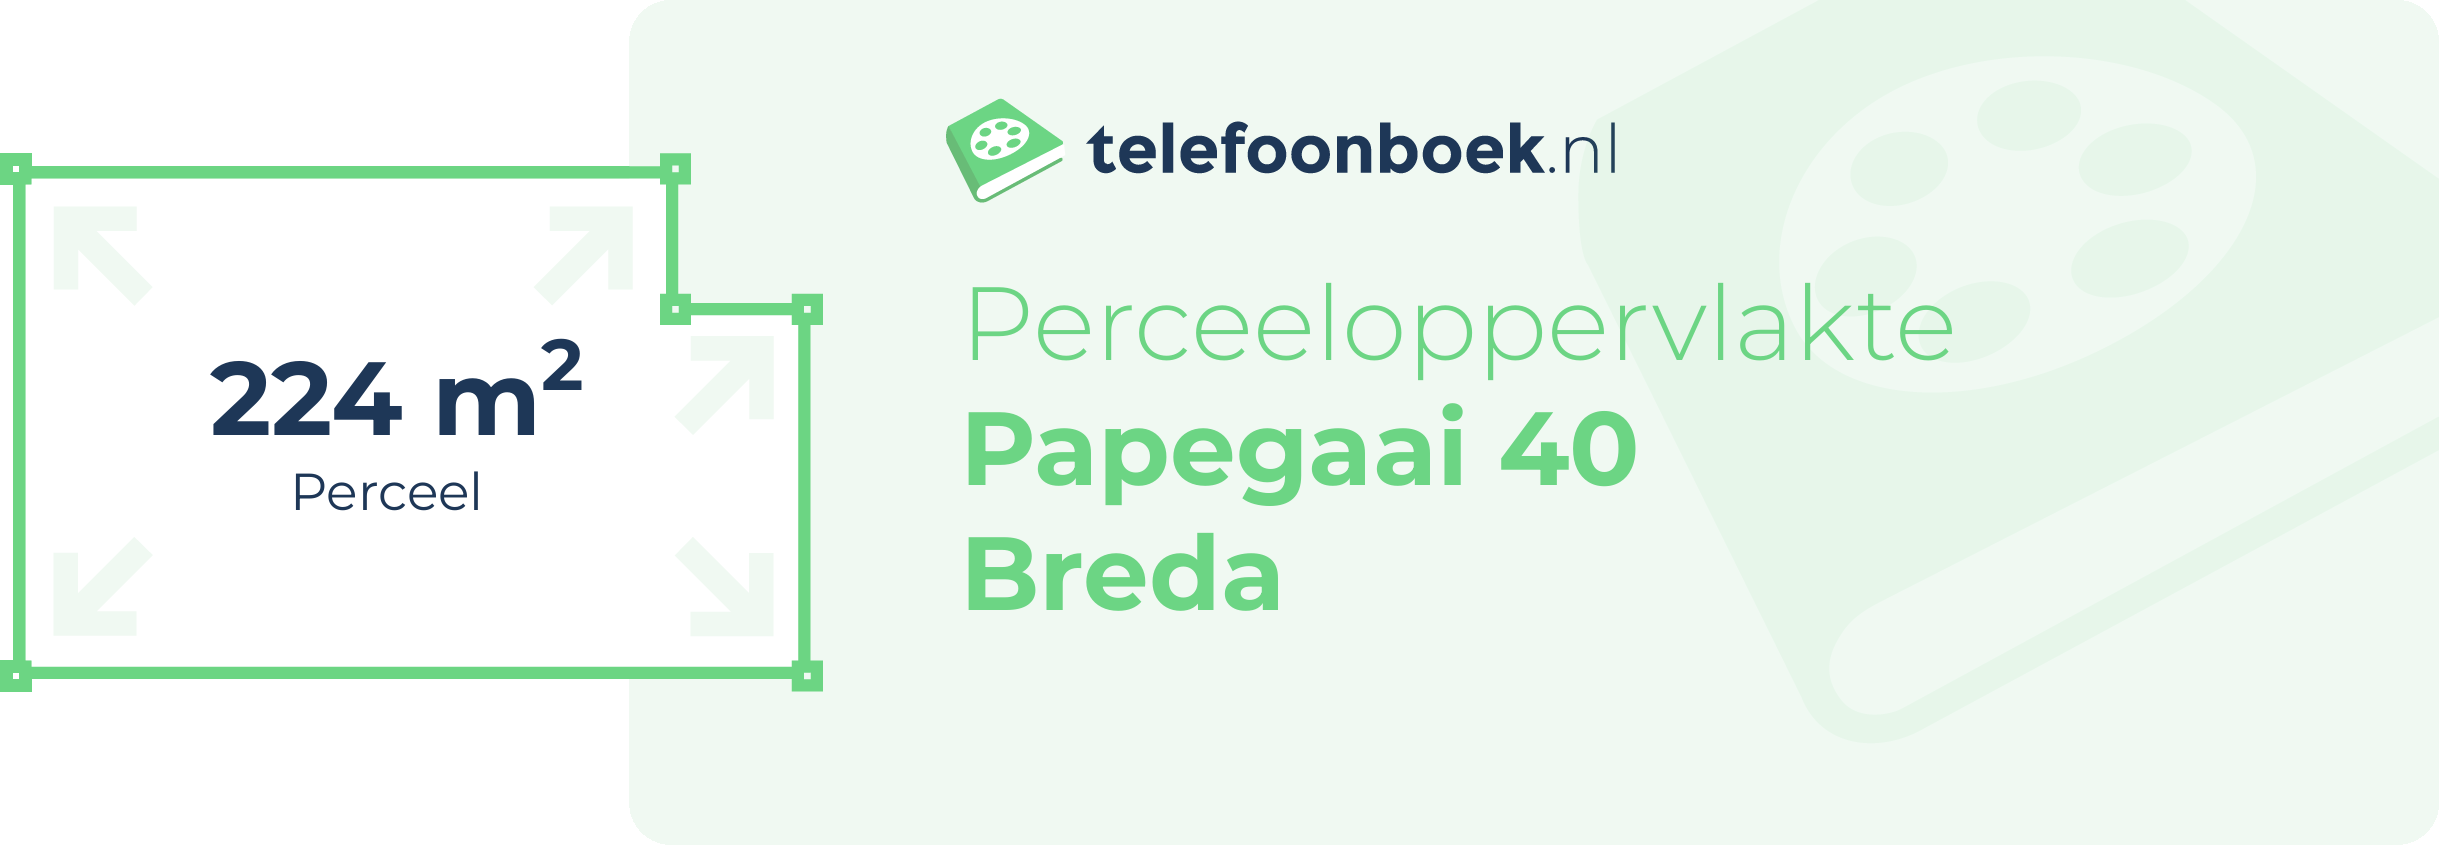 Perceeloppervlakte Papegaai 40 Breda